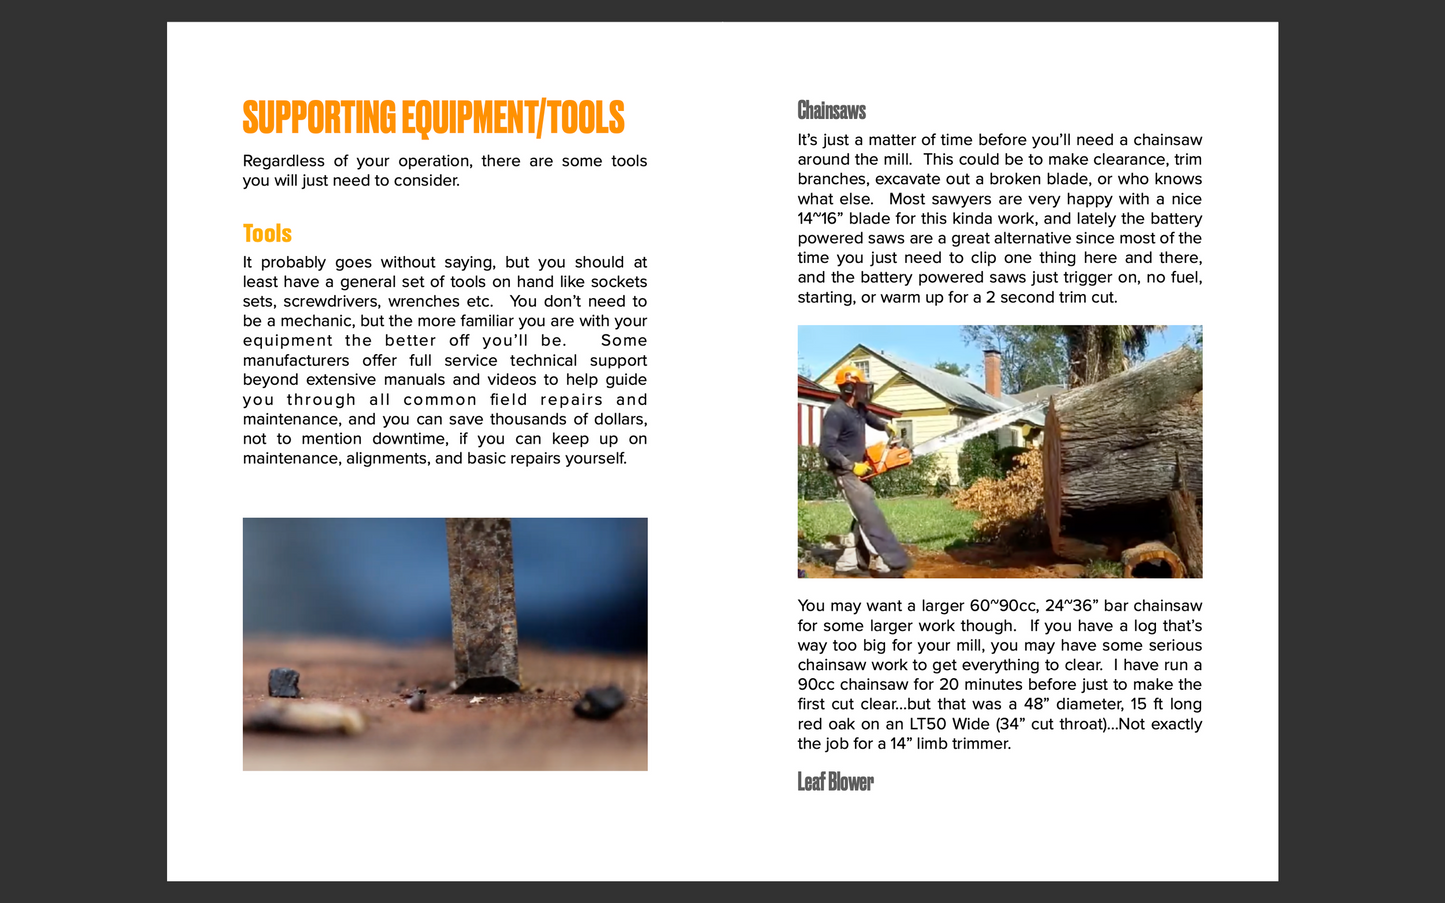 eBook: Build a sawmill business